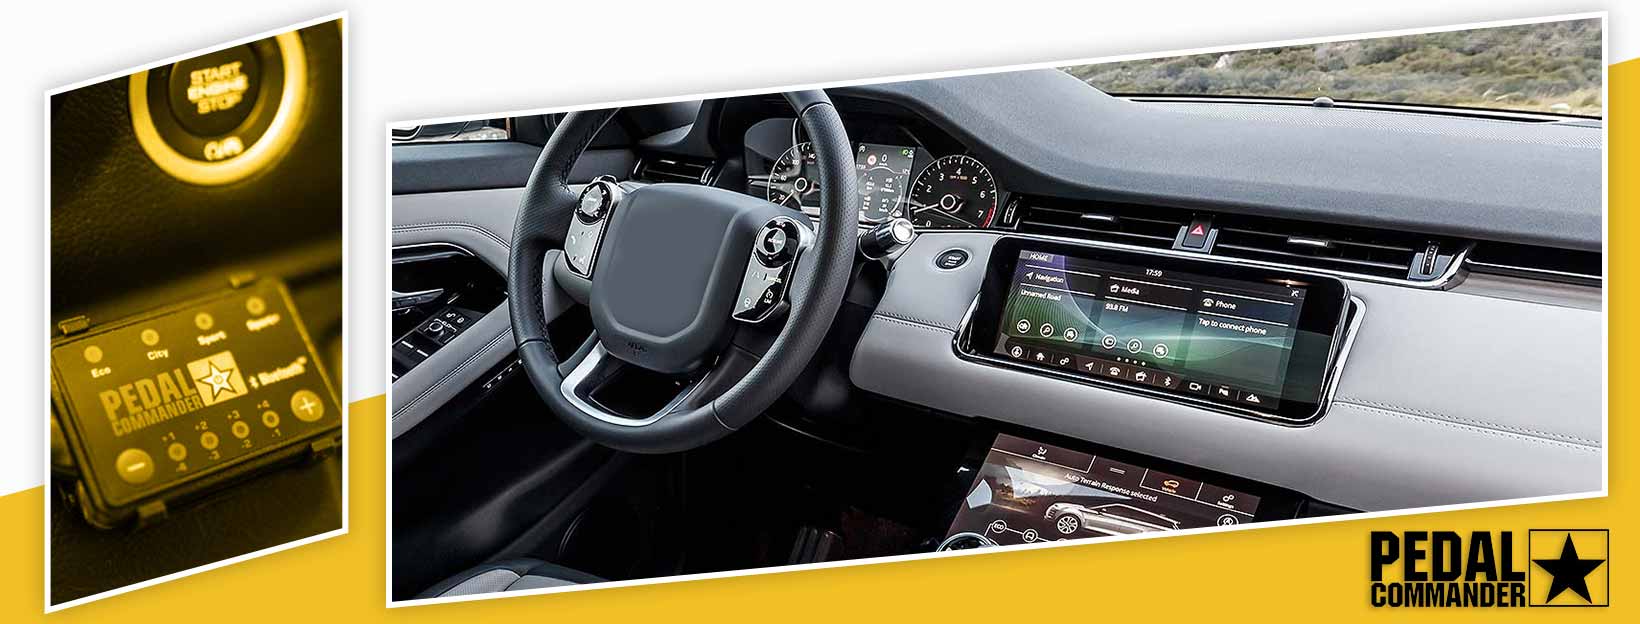 Pedal Commander for Land Rover Range Rover - interior